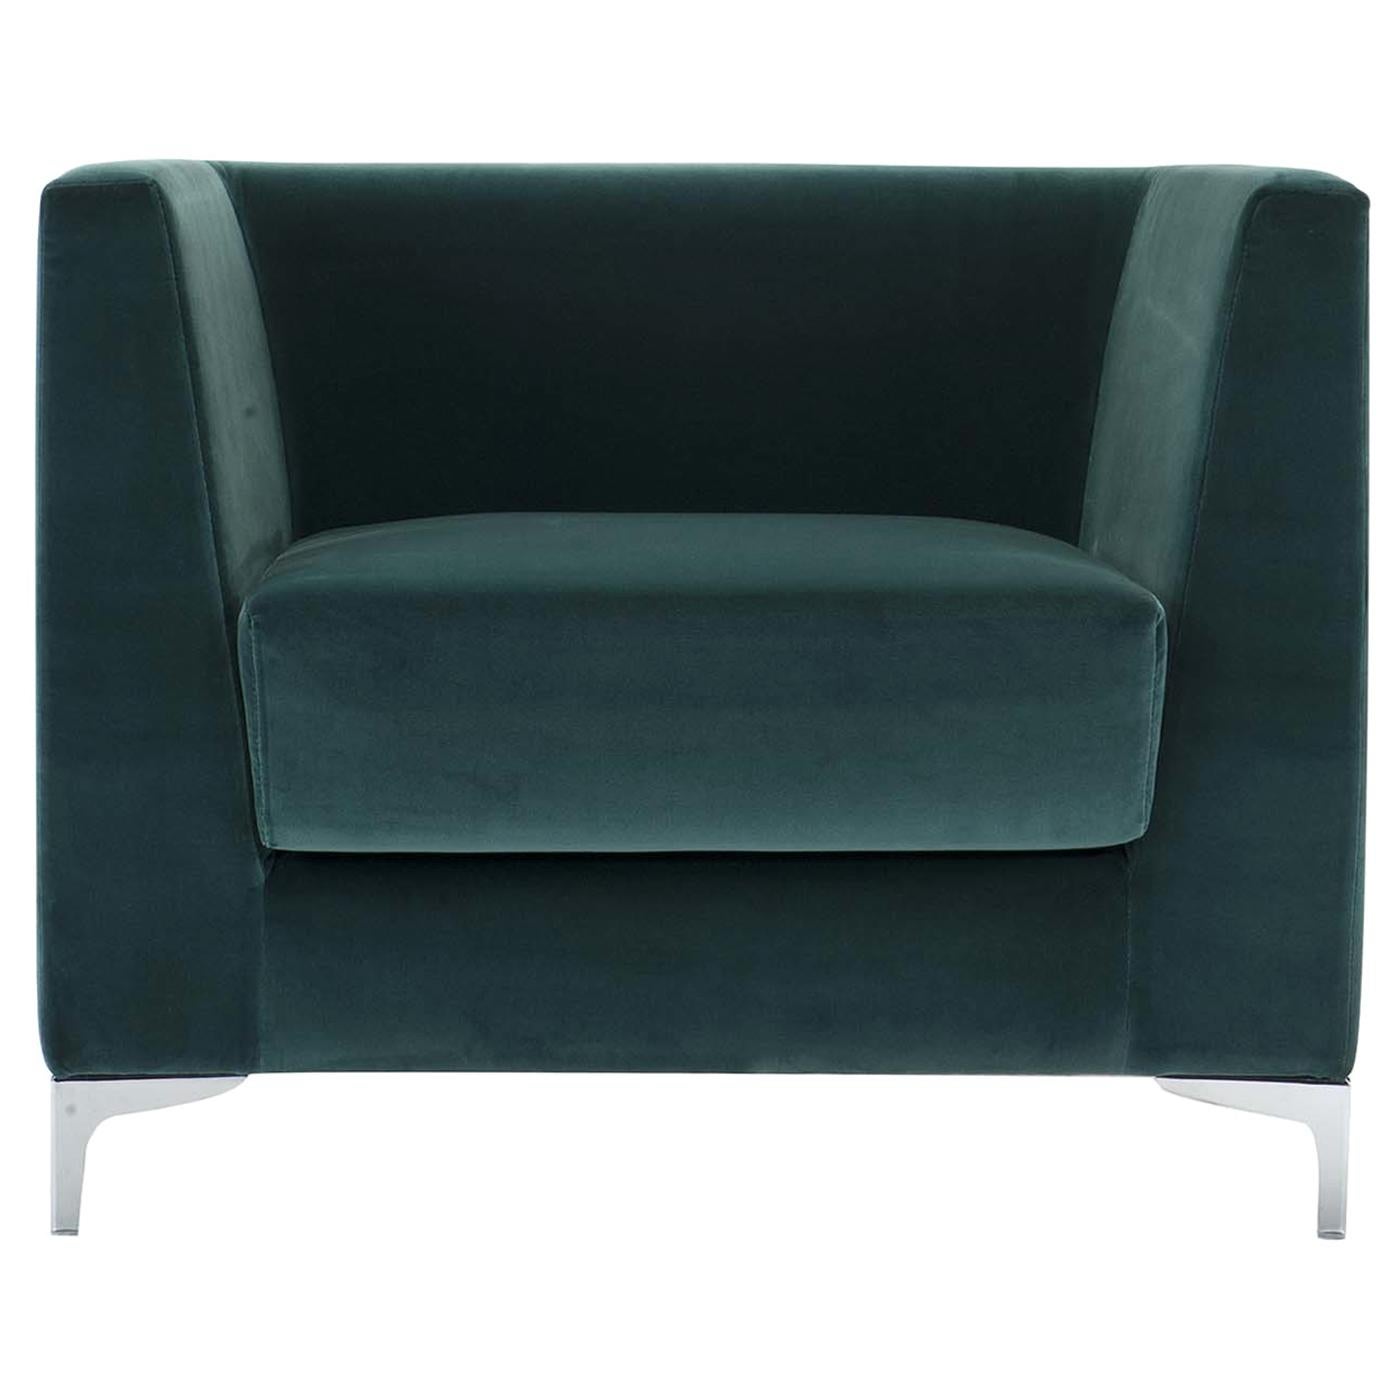 Lincoln Blue-Green Armchair